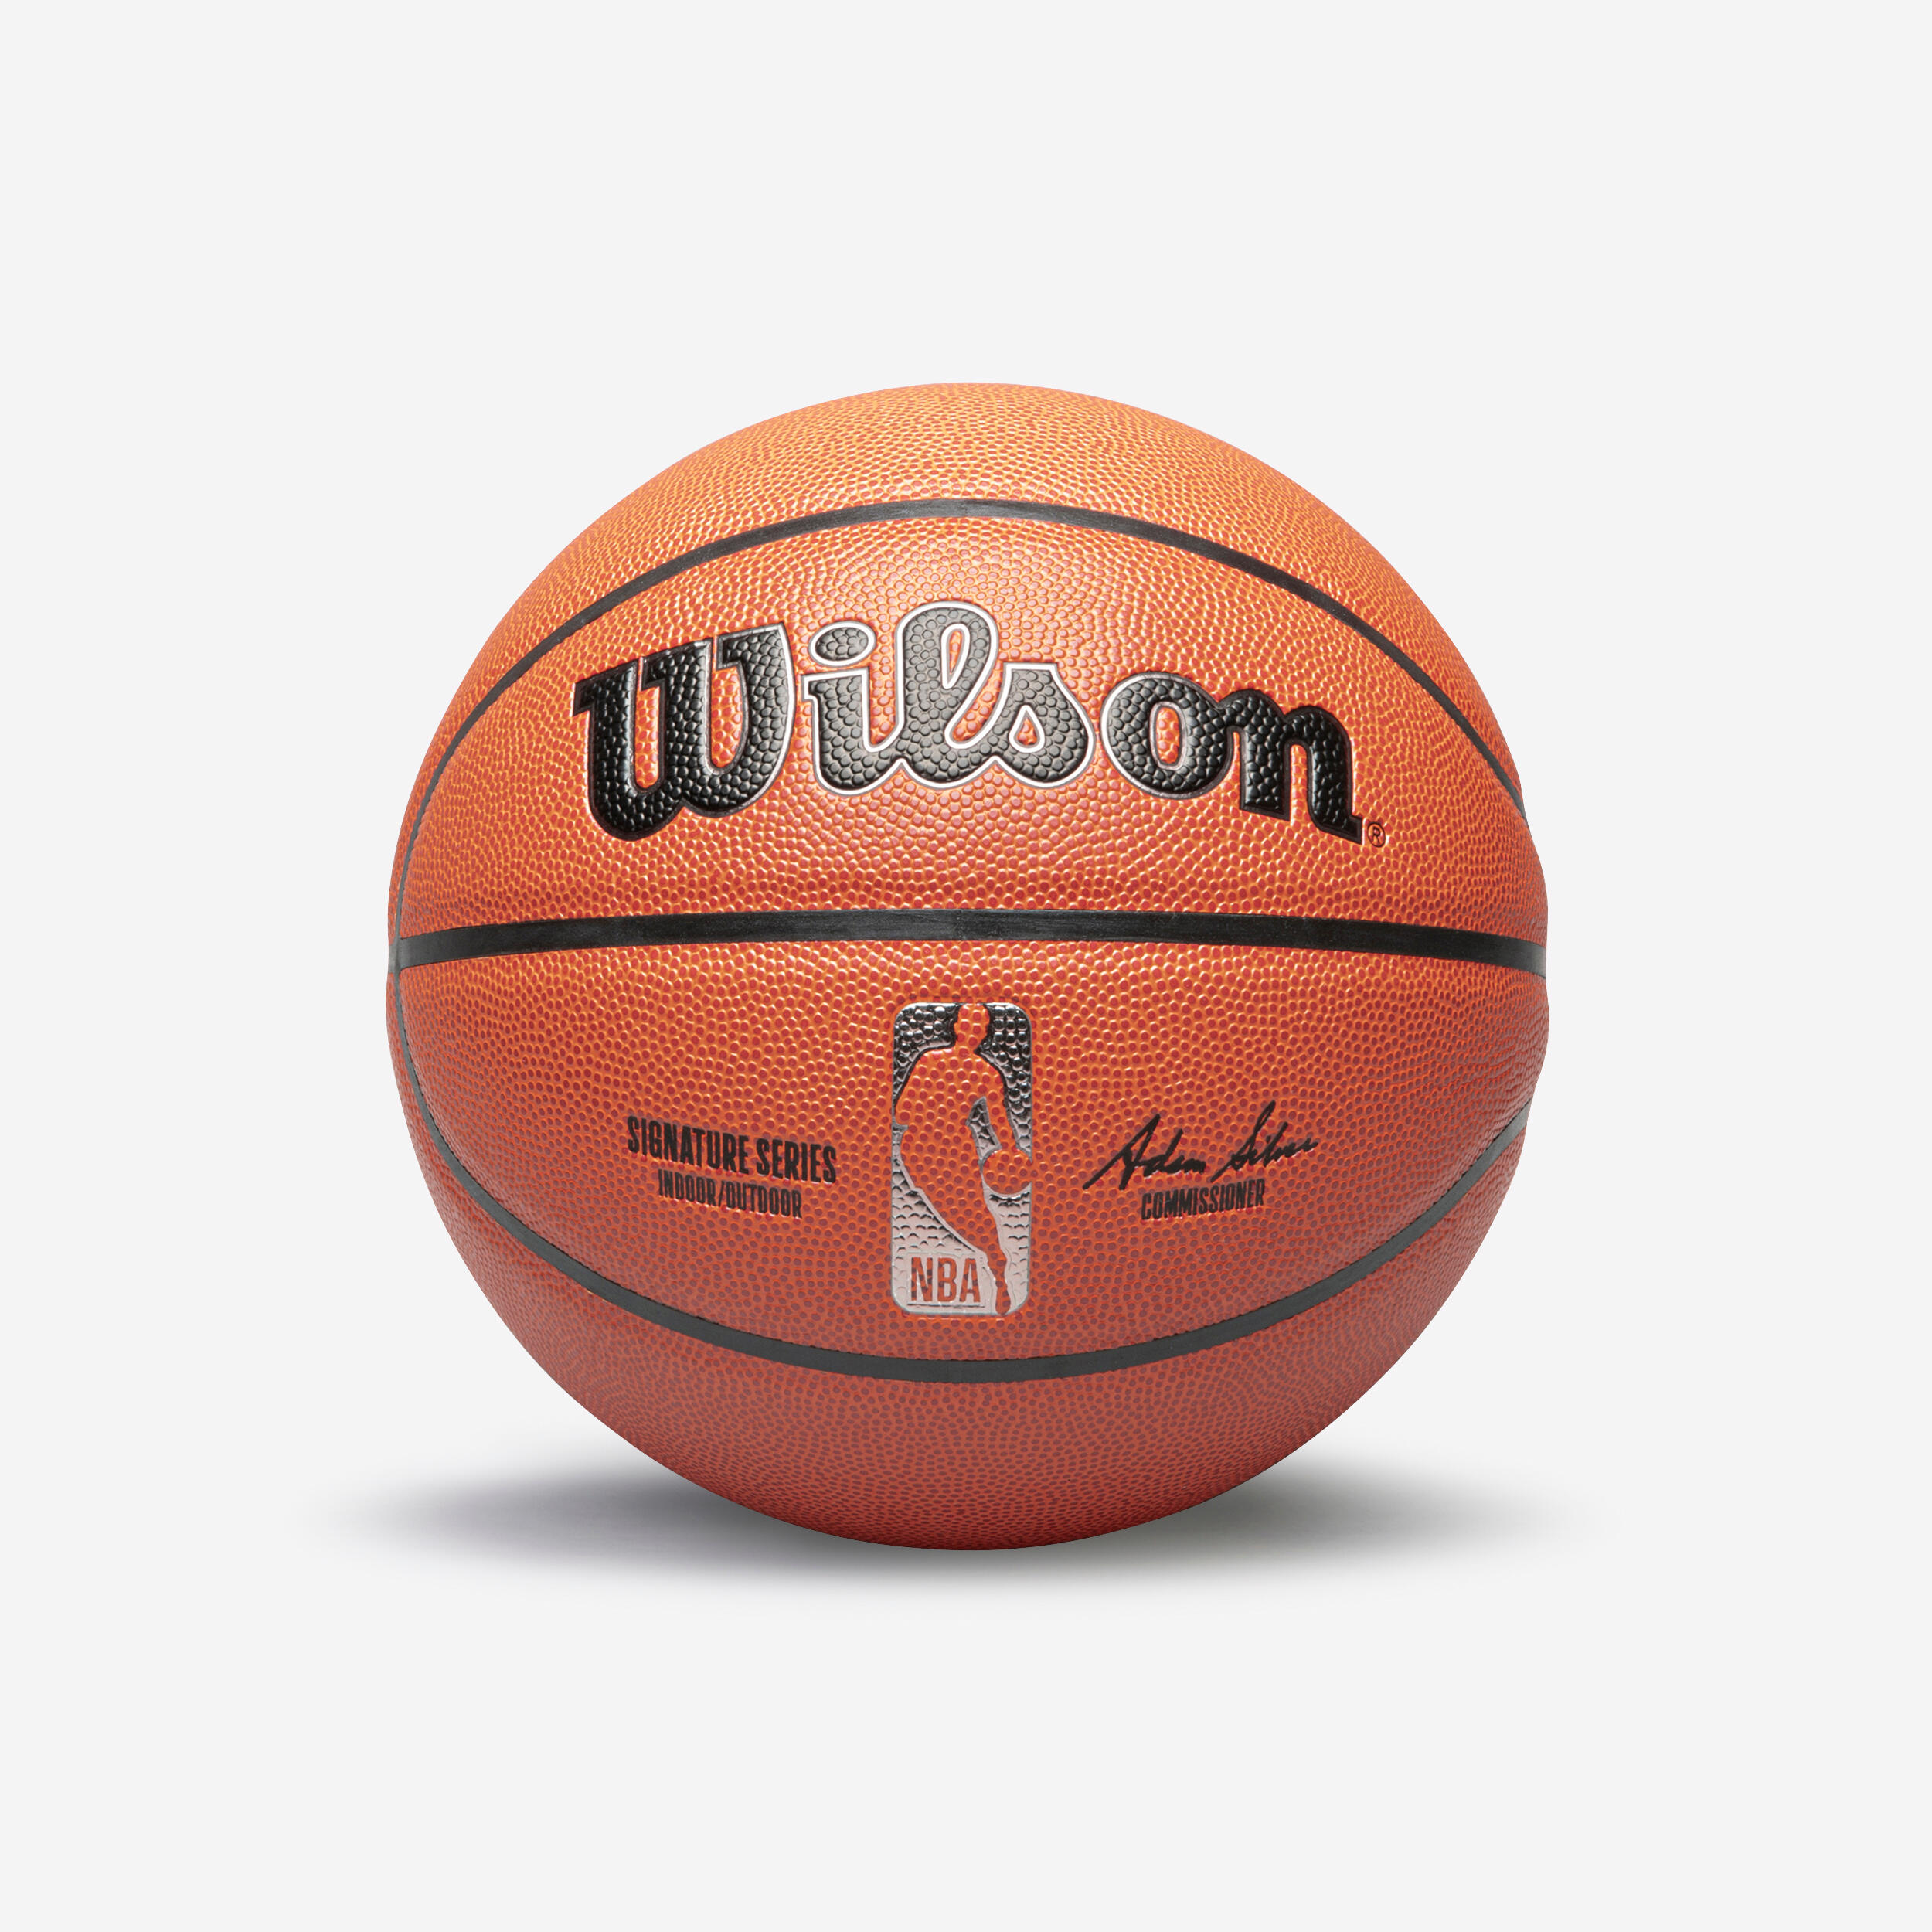 Basketboll Storlek 7 Nba Wilson Signature Series S7 Orange